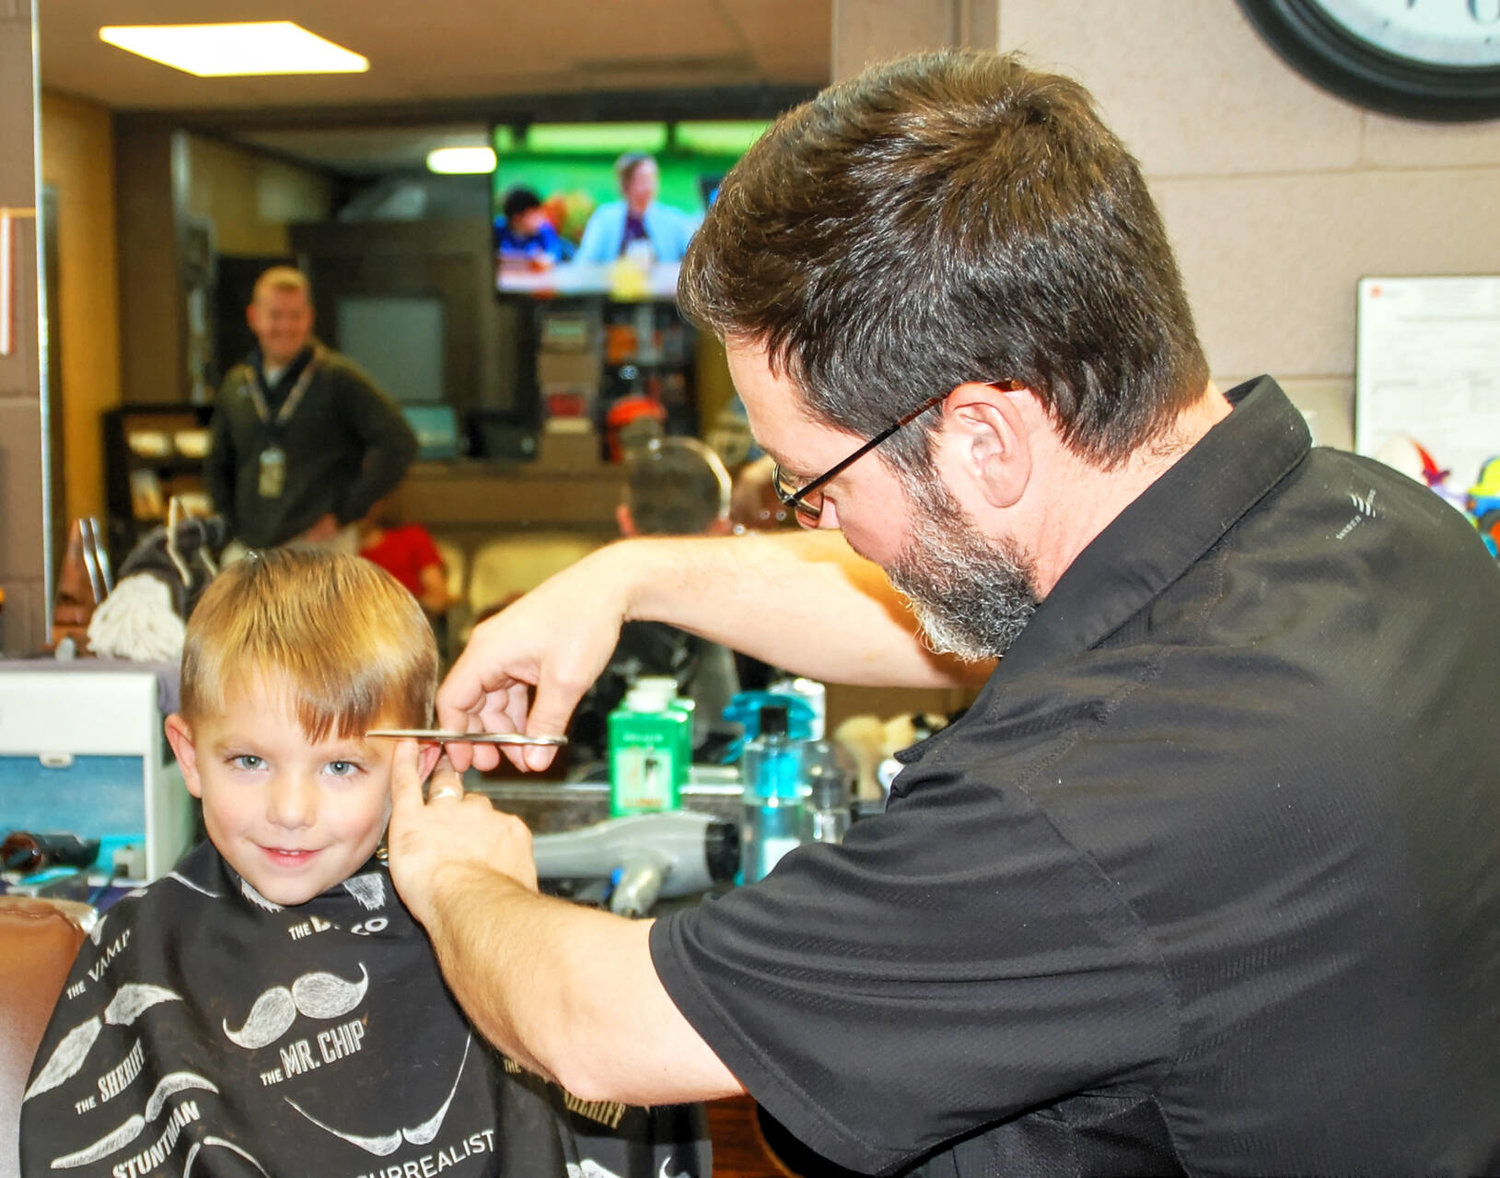 Joyful haircut - Shelbyville Times-Gazette